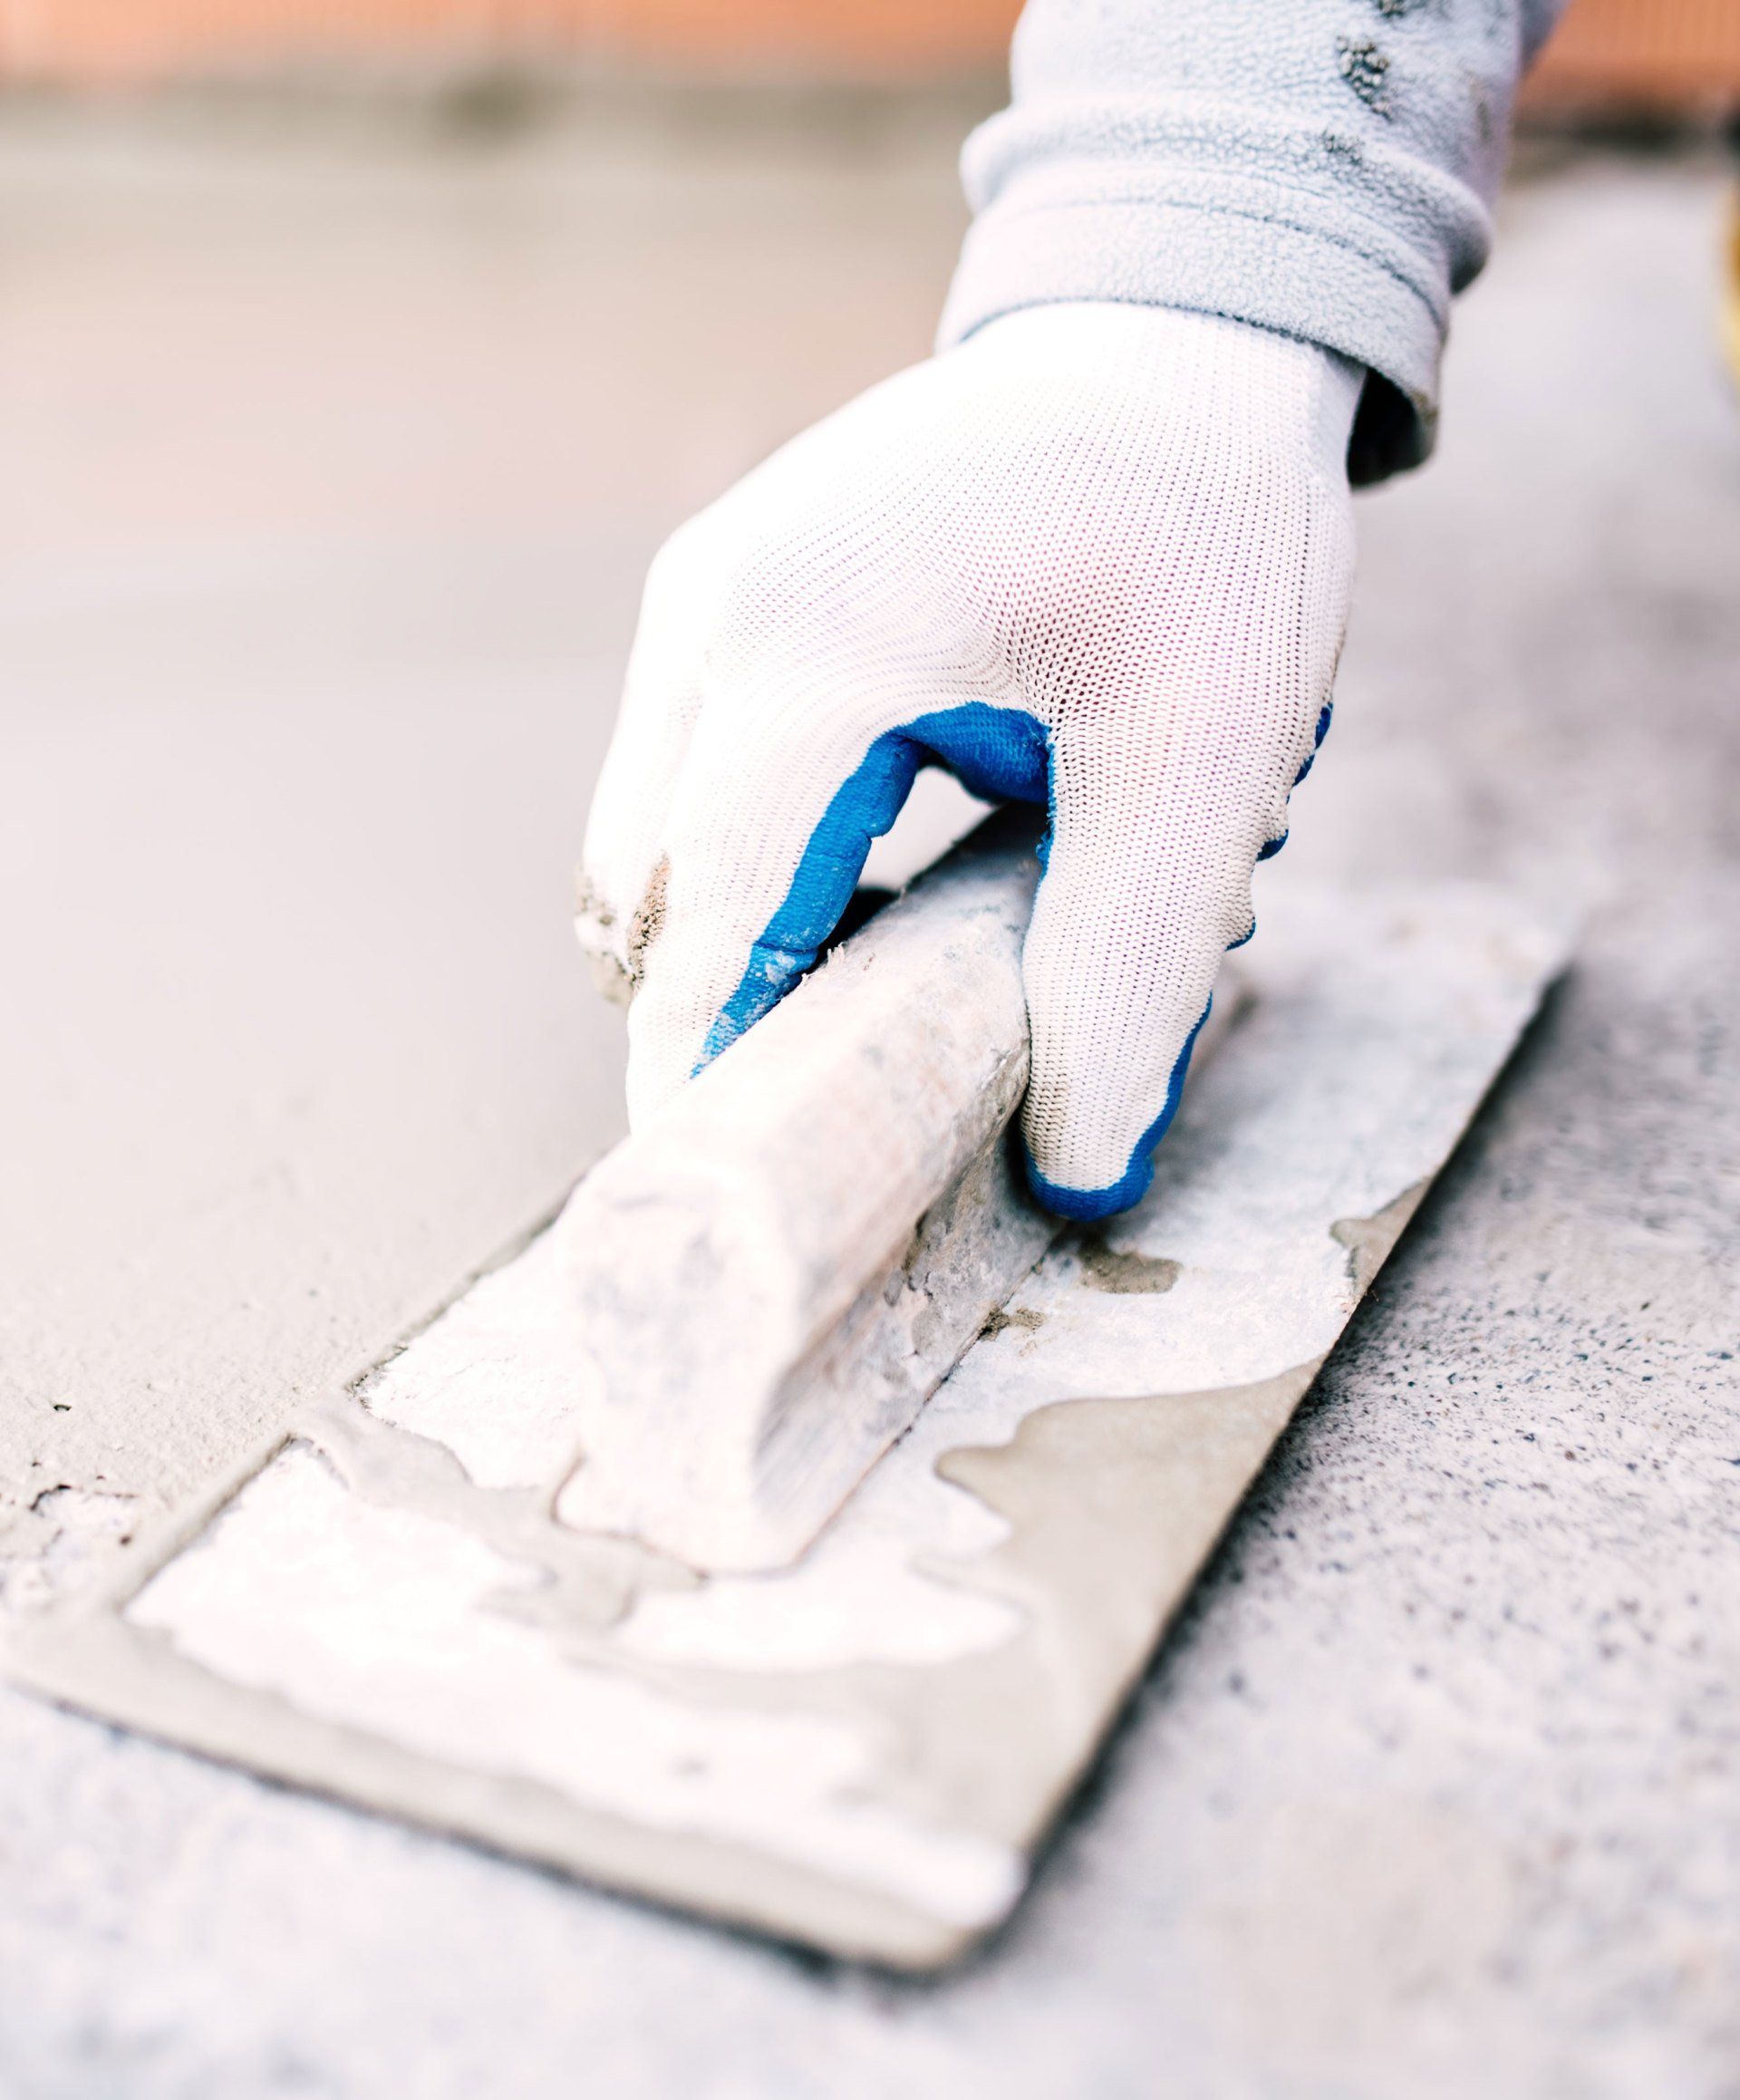 Wall Repair — Worker Repairing Cement Walls in Davenport, IA